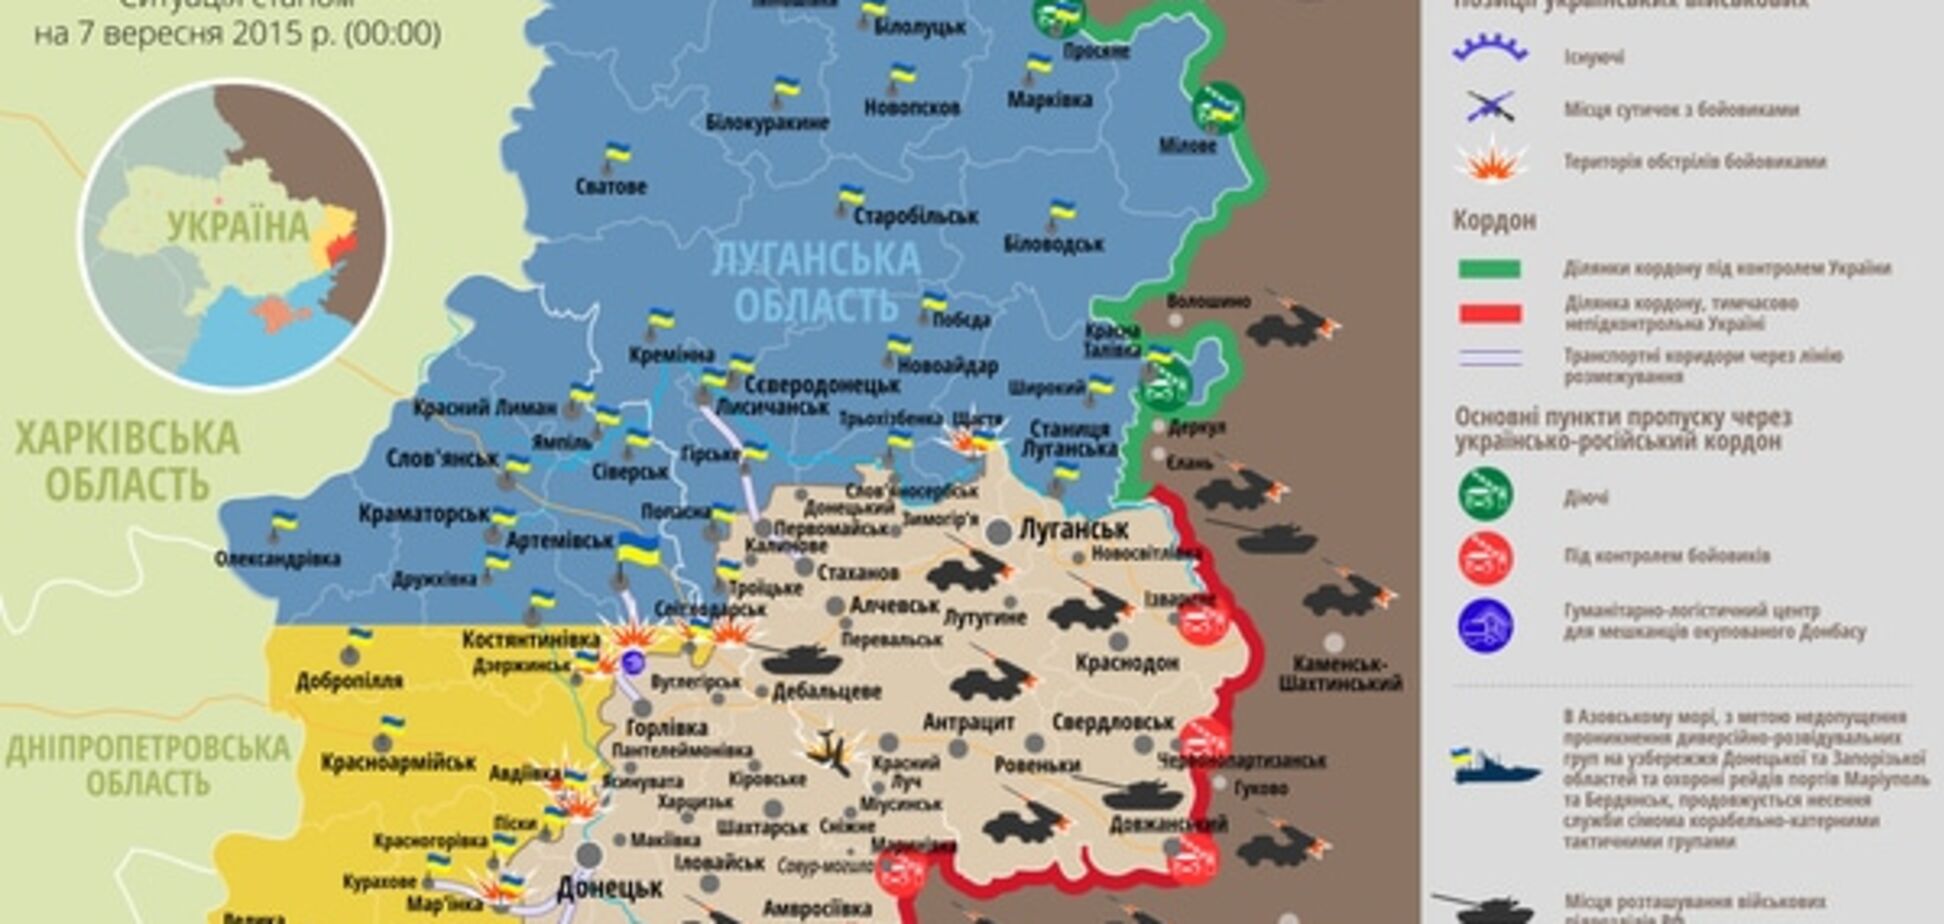 Режим тишины с залпами гранатометов и БМП: опубликована карта АТО